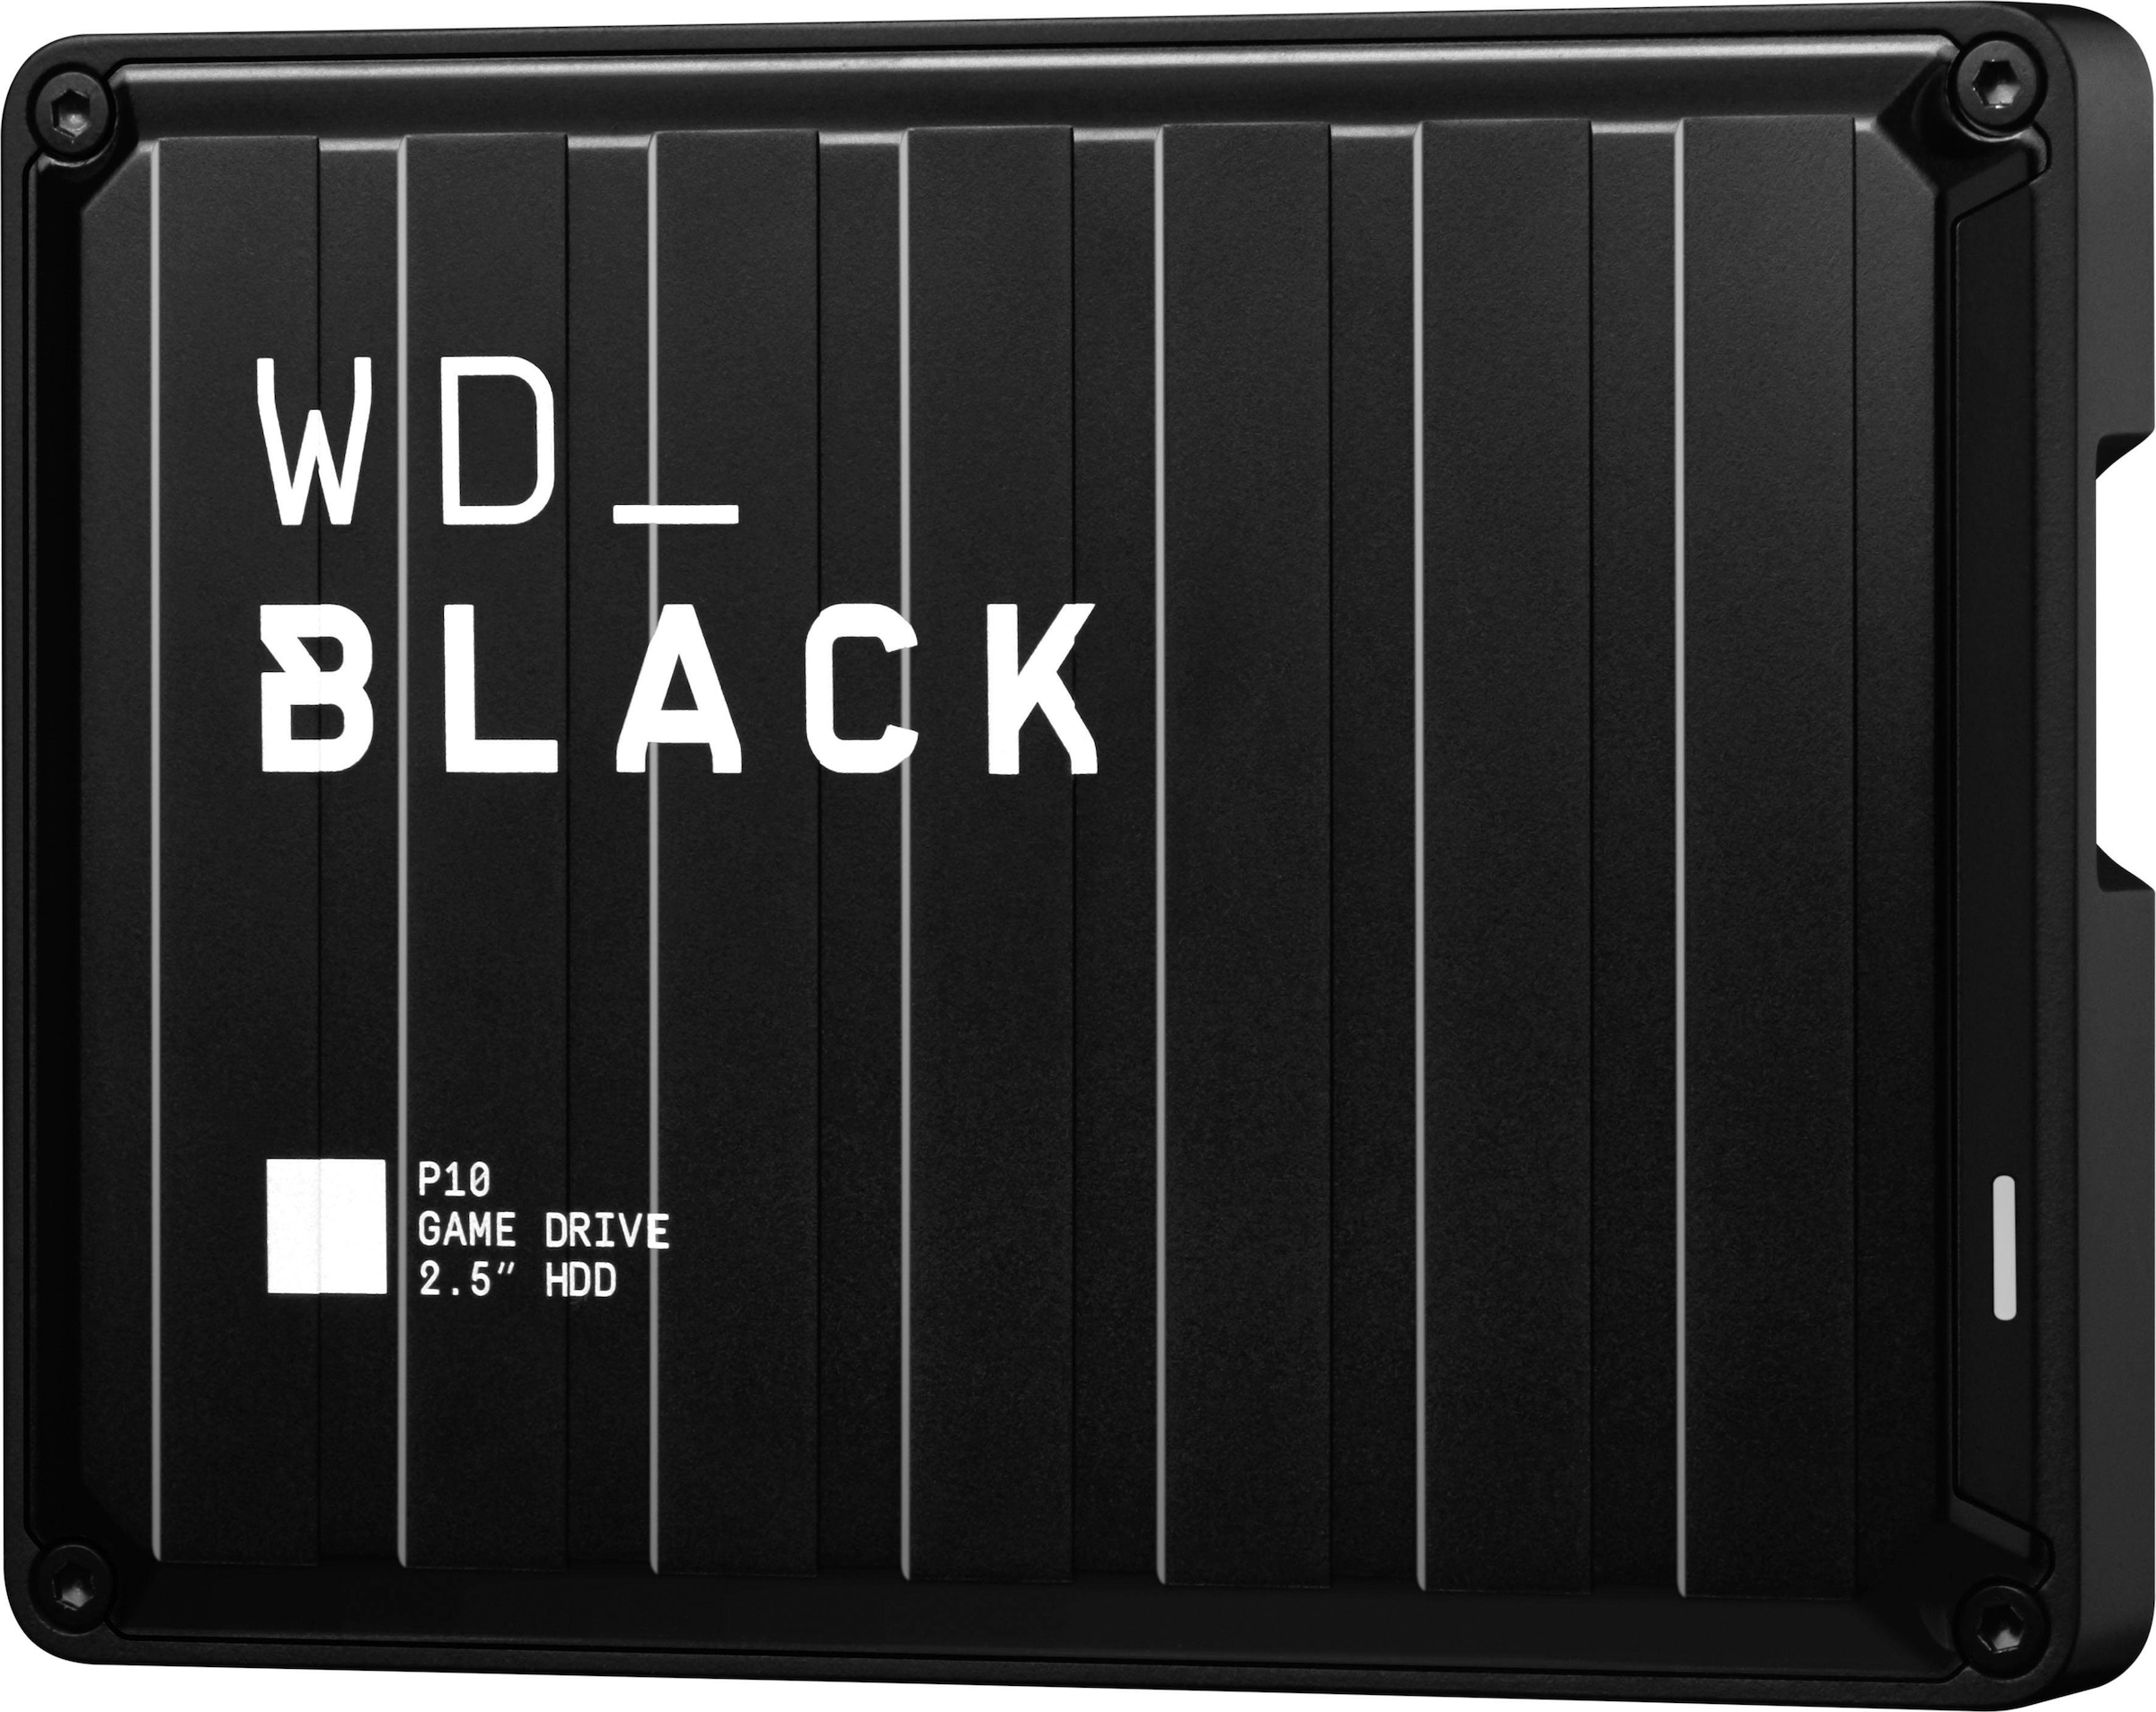 WD_Black externe Gaming-Festplatte »P10 Game Drive«, 2,5 Zoll, Anschluss USB 3.2